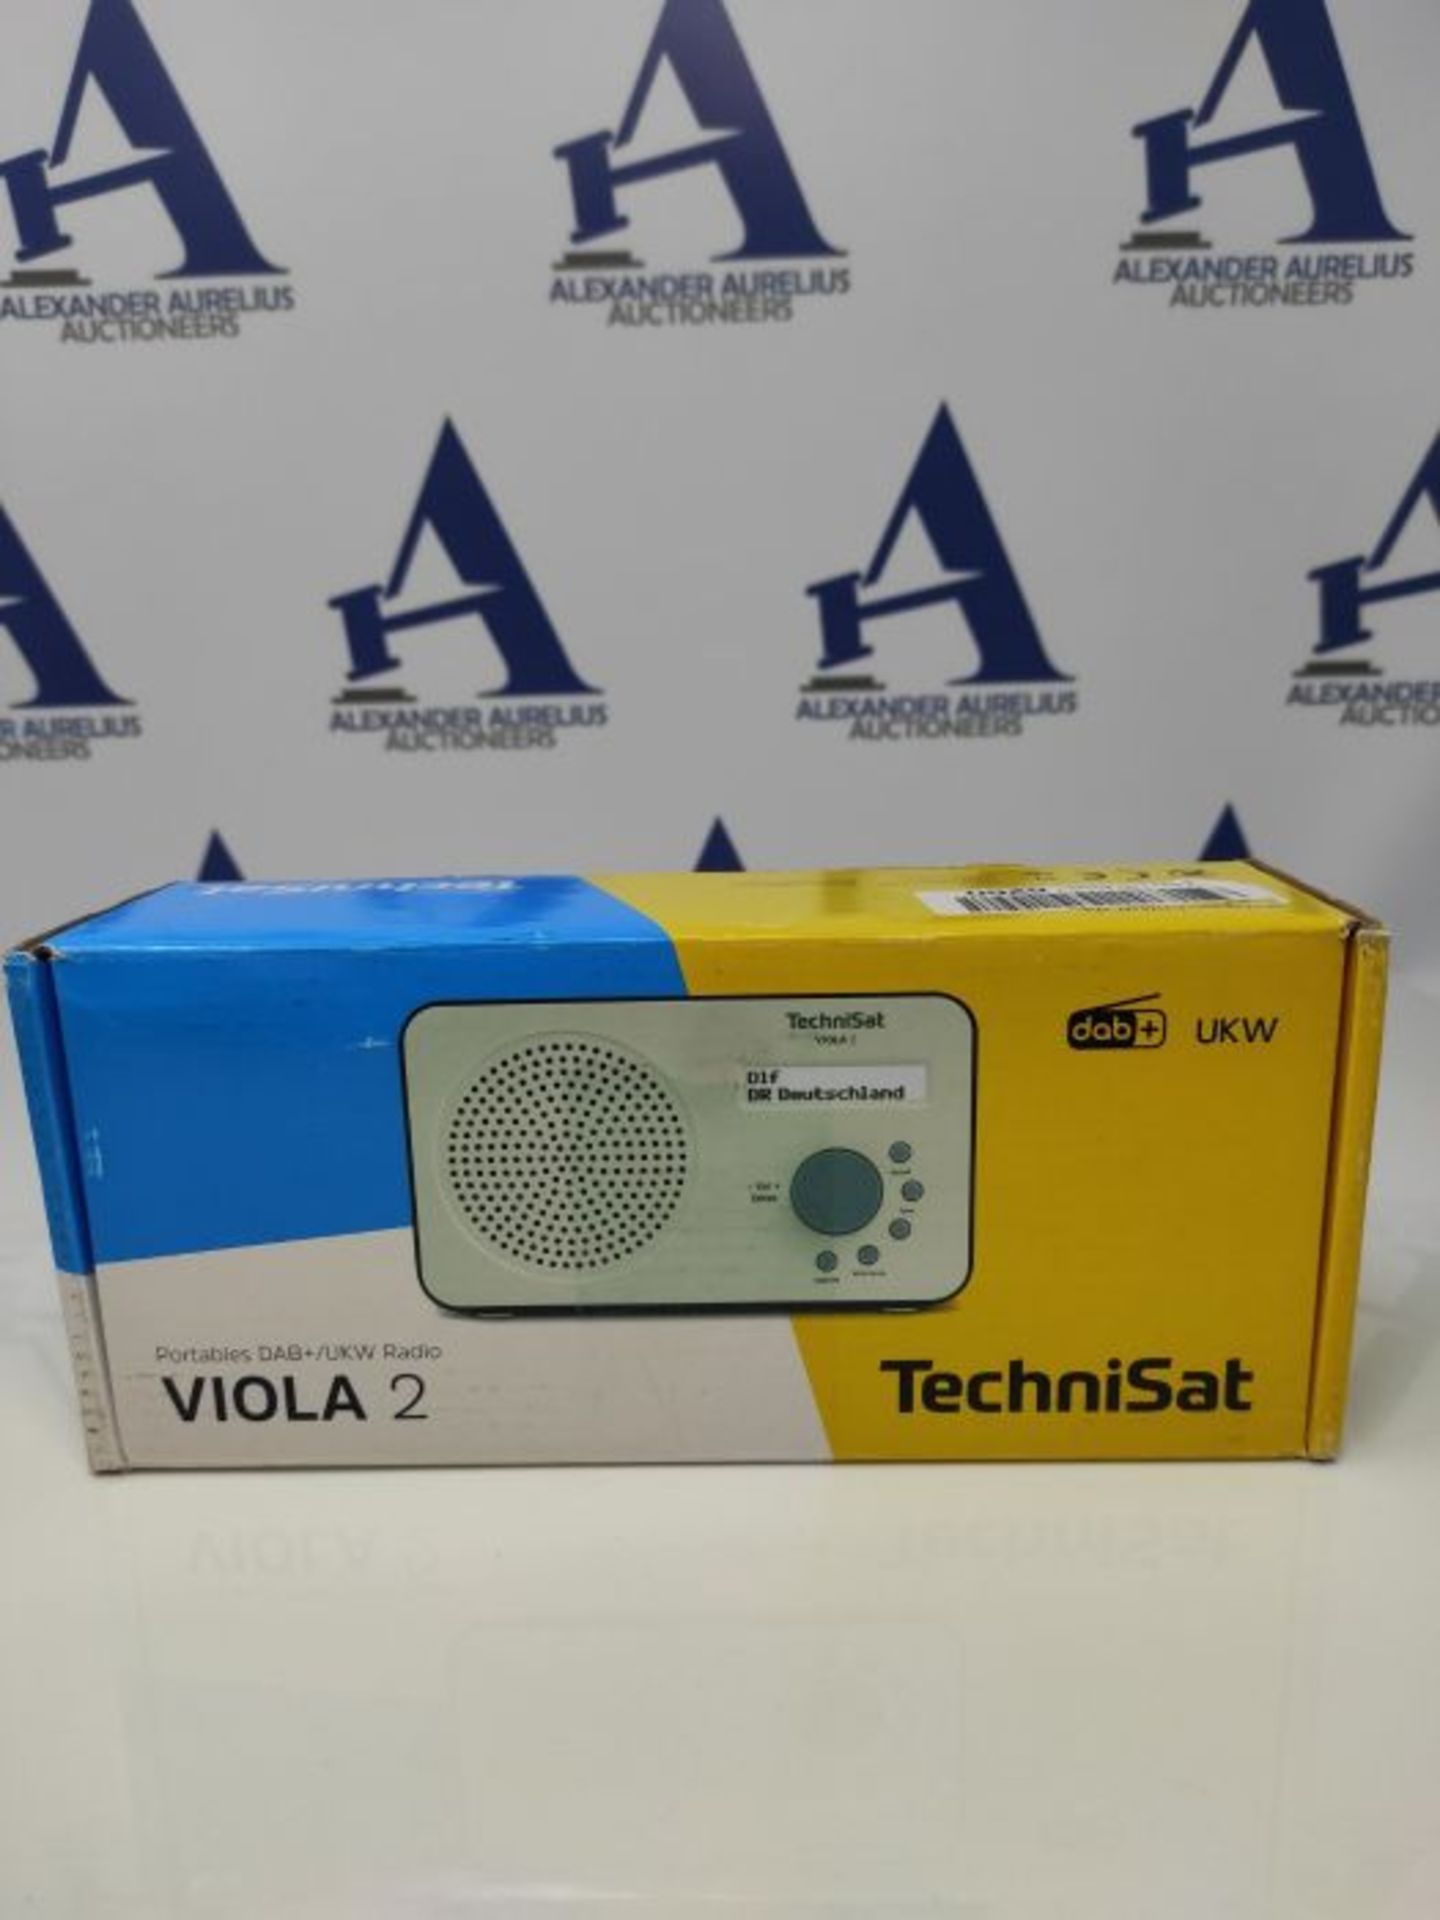 TechniSat Viola 2 - Image 2 of 3